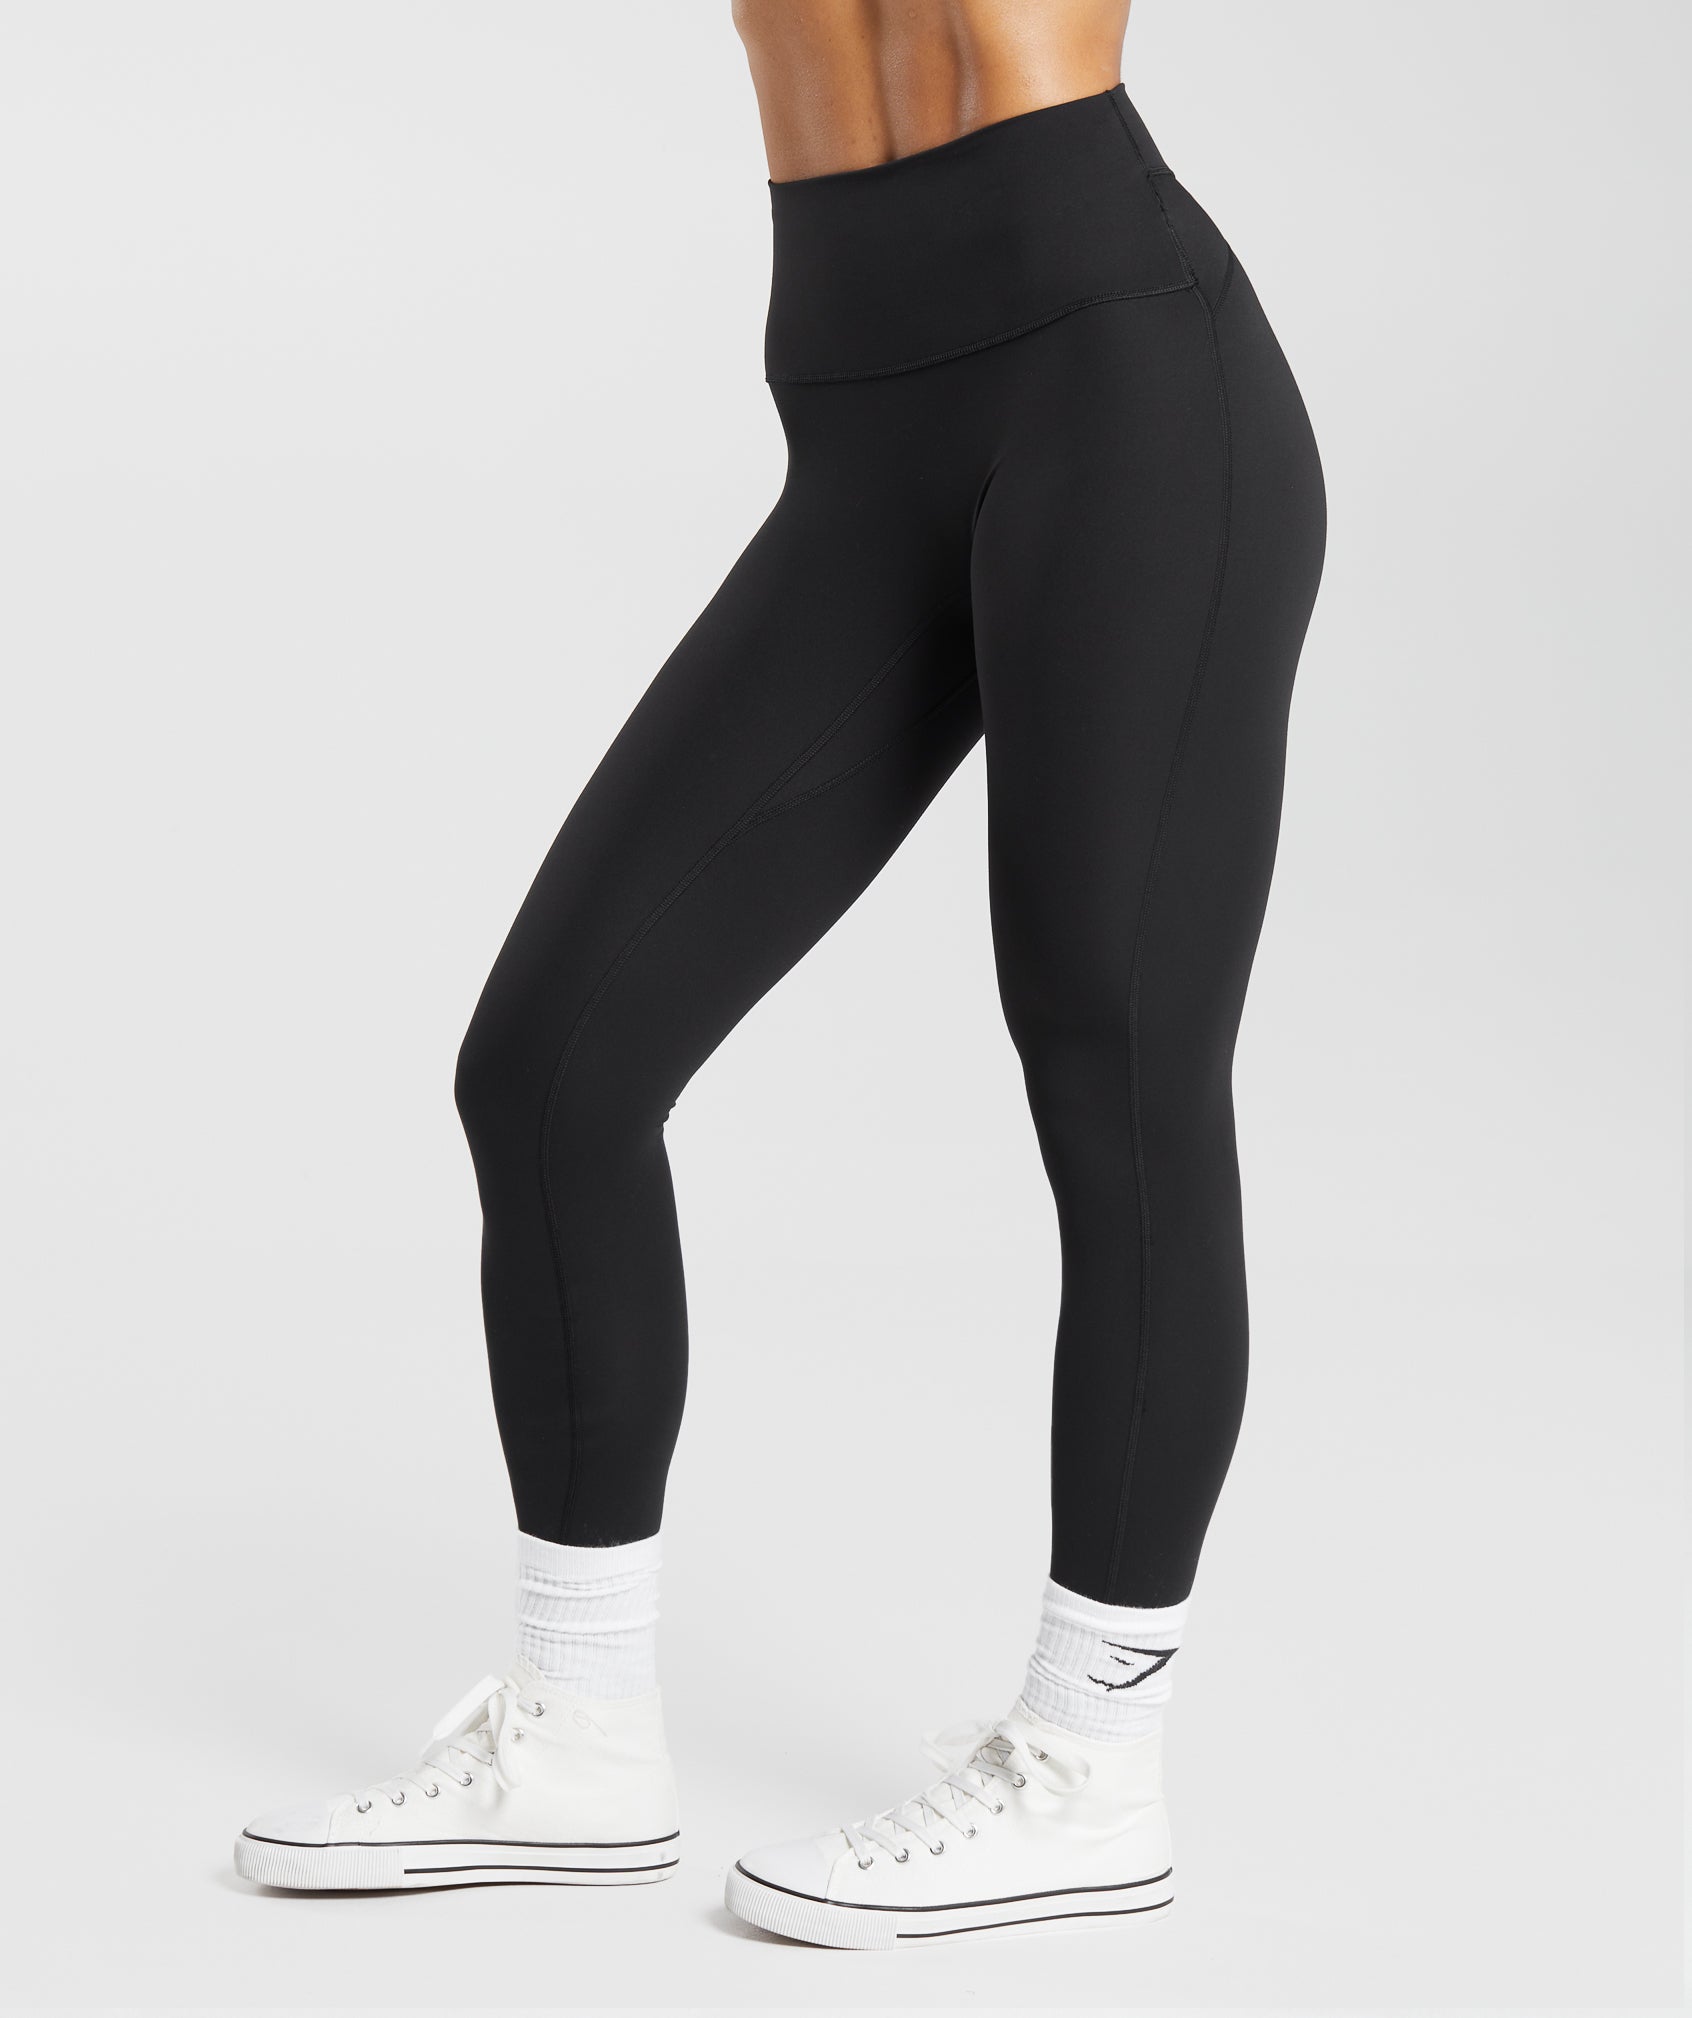 Women's Leggings Women High Waist Fitness Yoga Pants Tightest Exercise  Butt' Lift Curves Gym Sports Workout